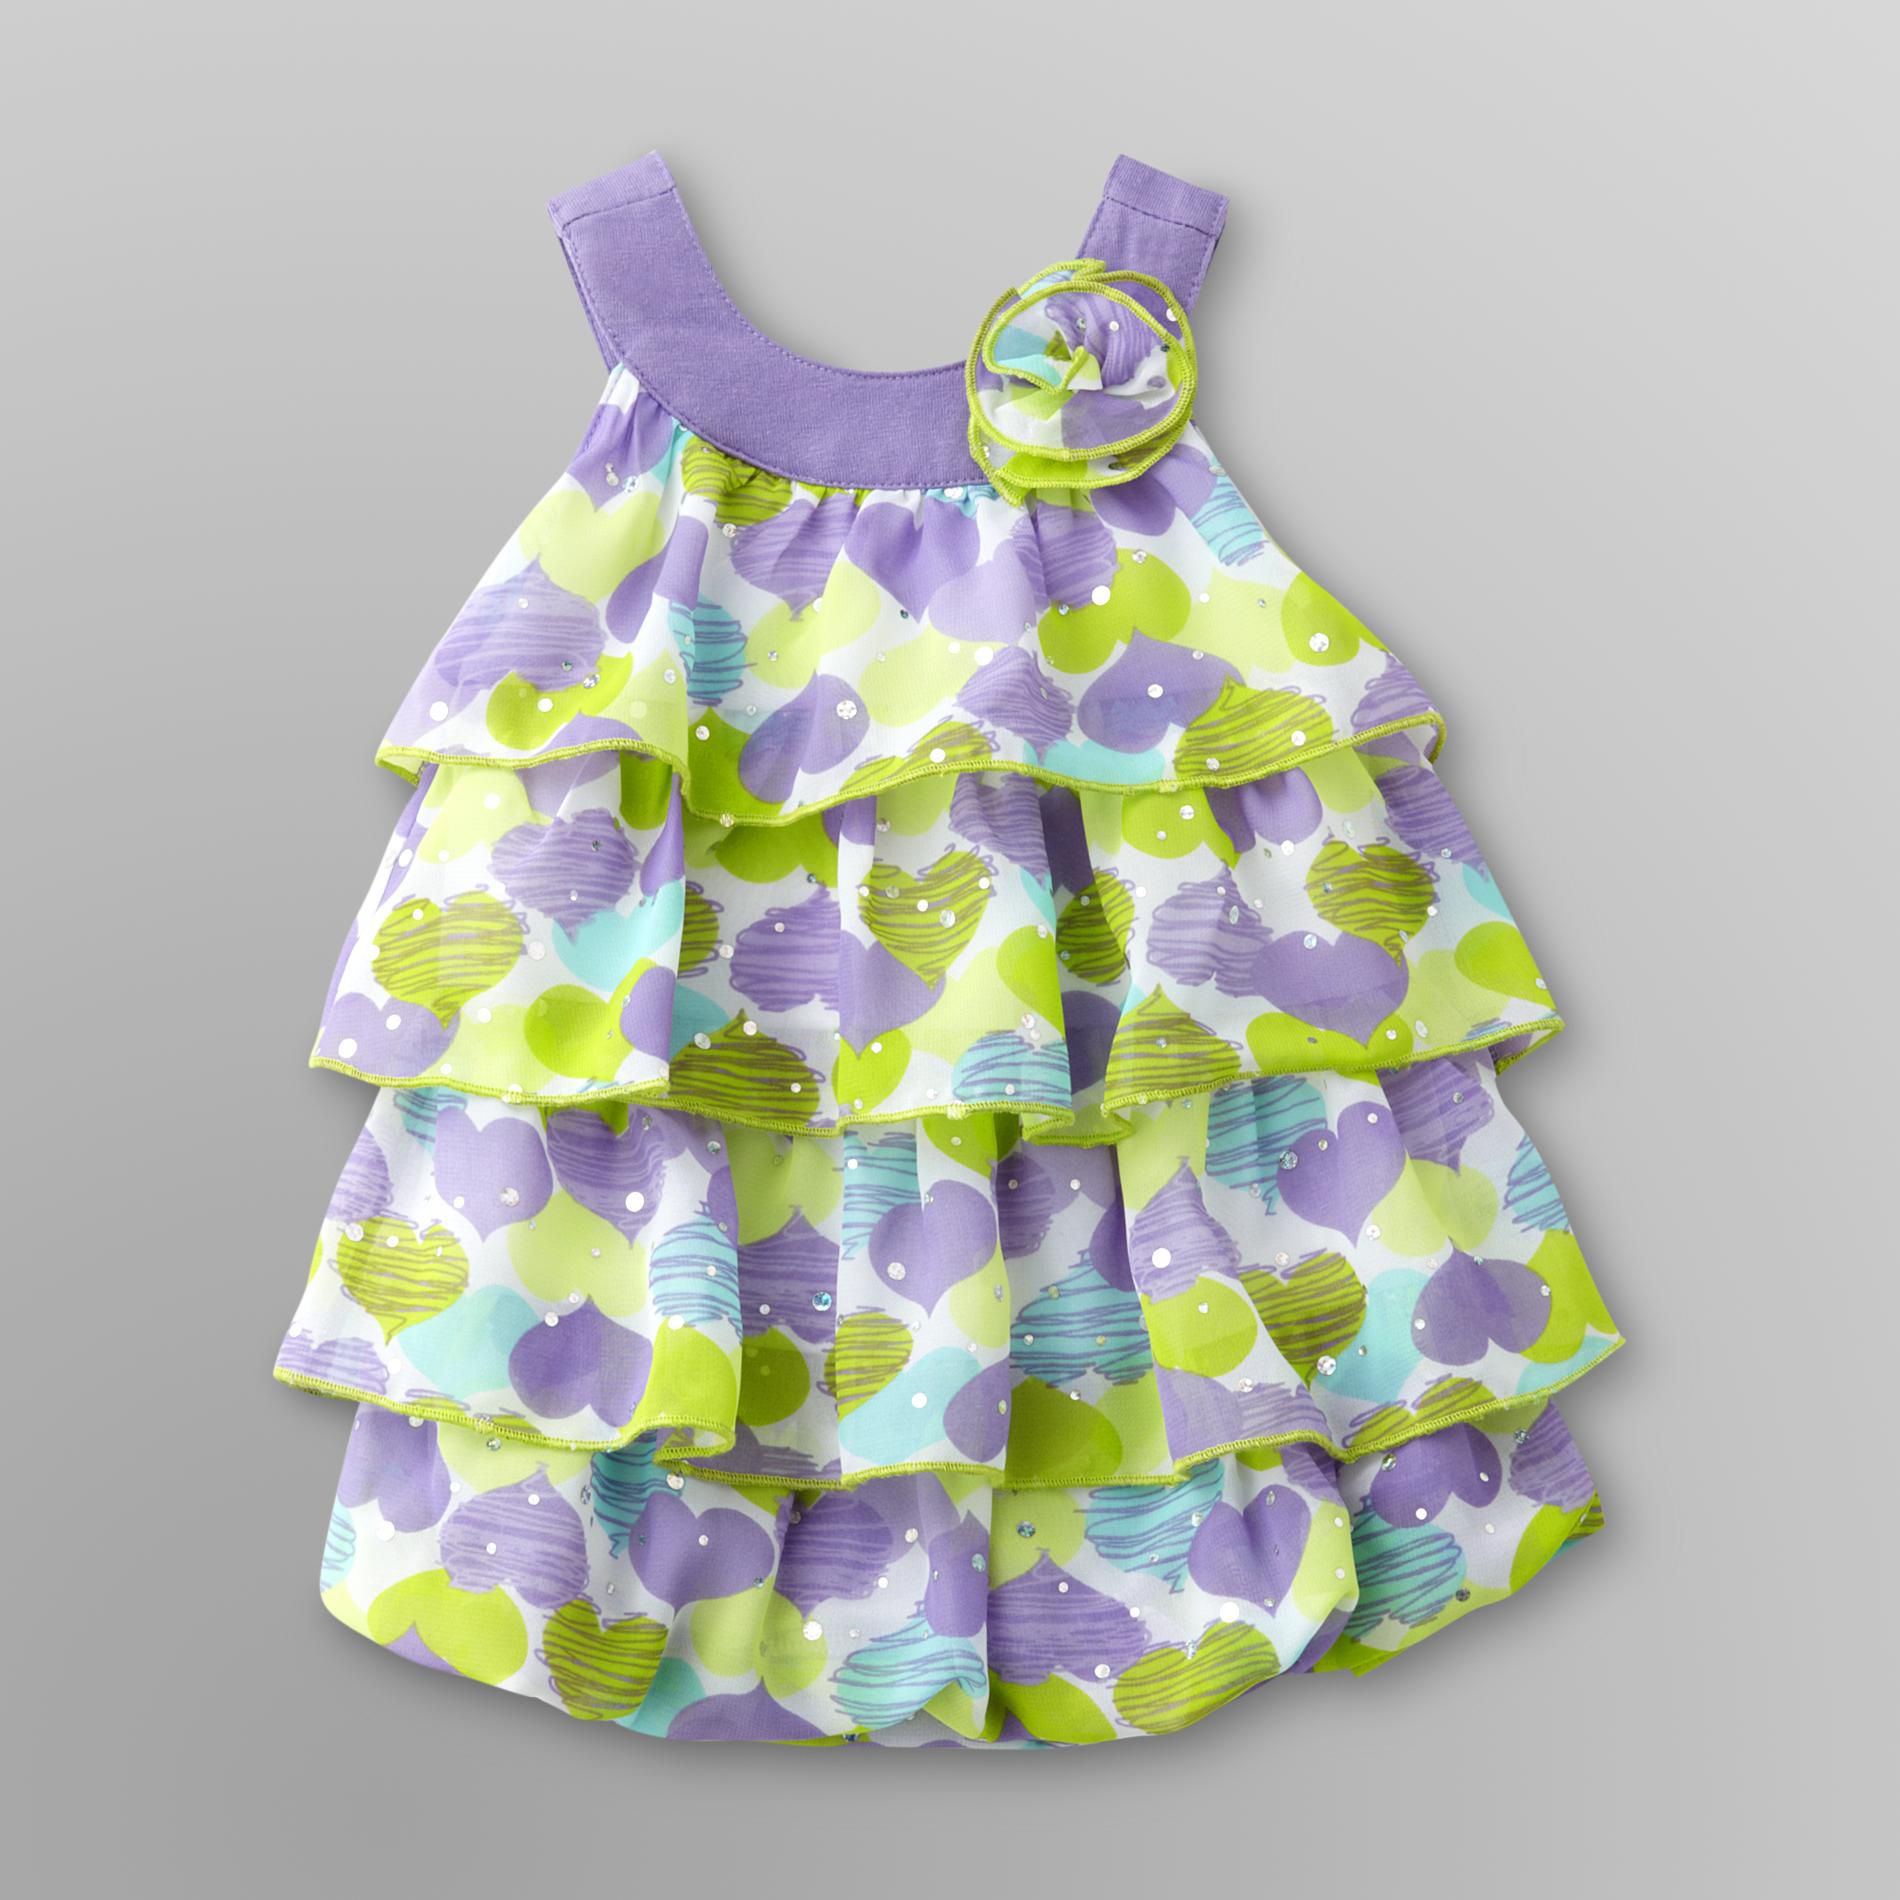 Small Wonders Infant Girl's Chiffon Dress - Hearts